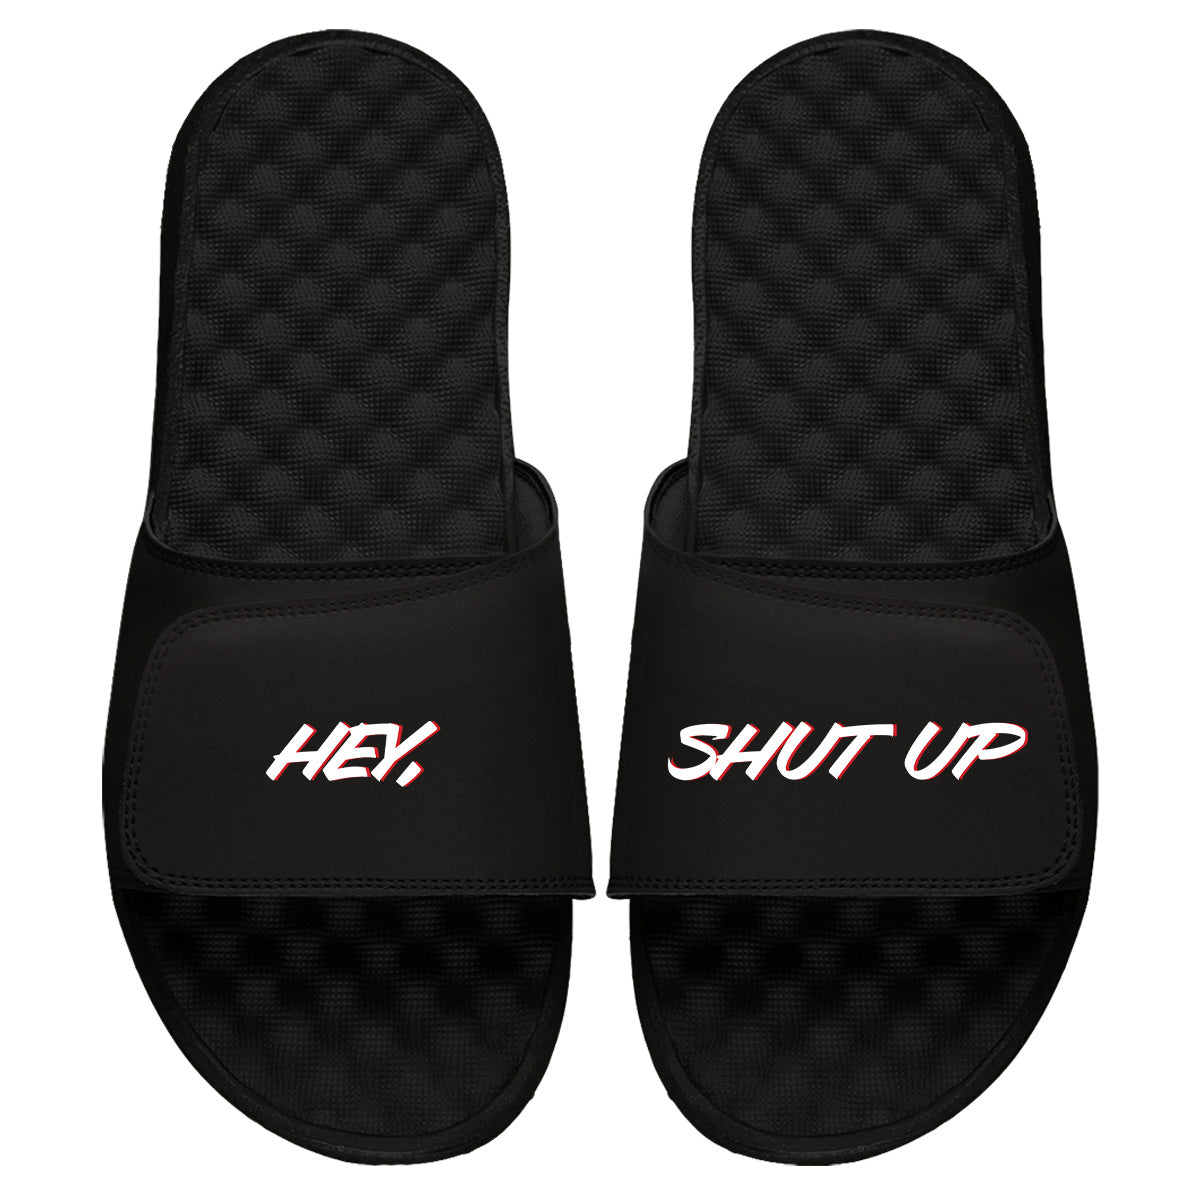 Hey, Shut Up Slides